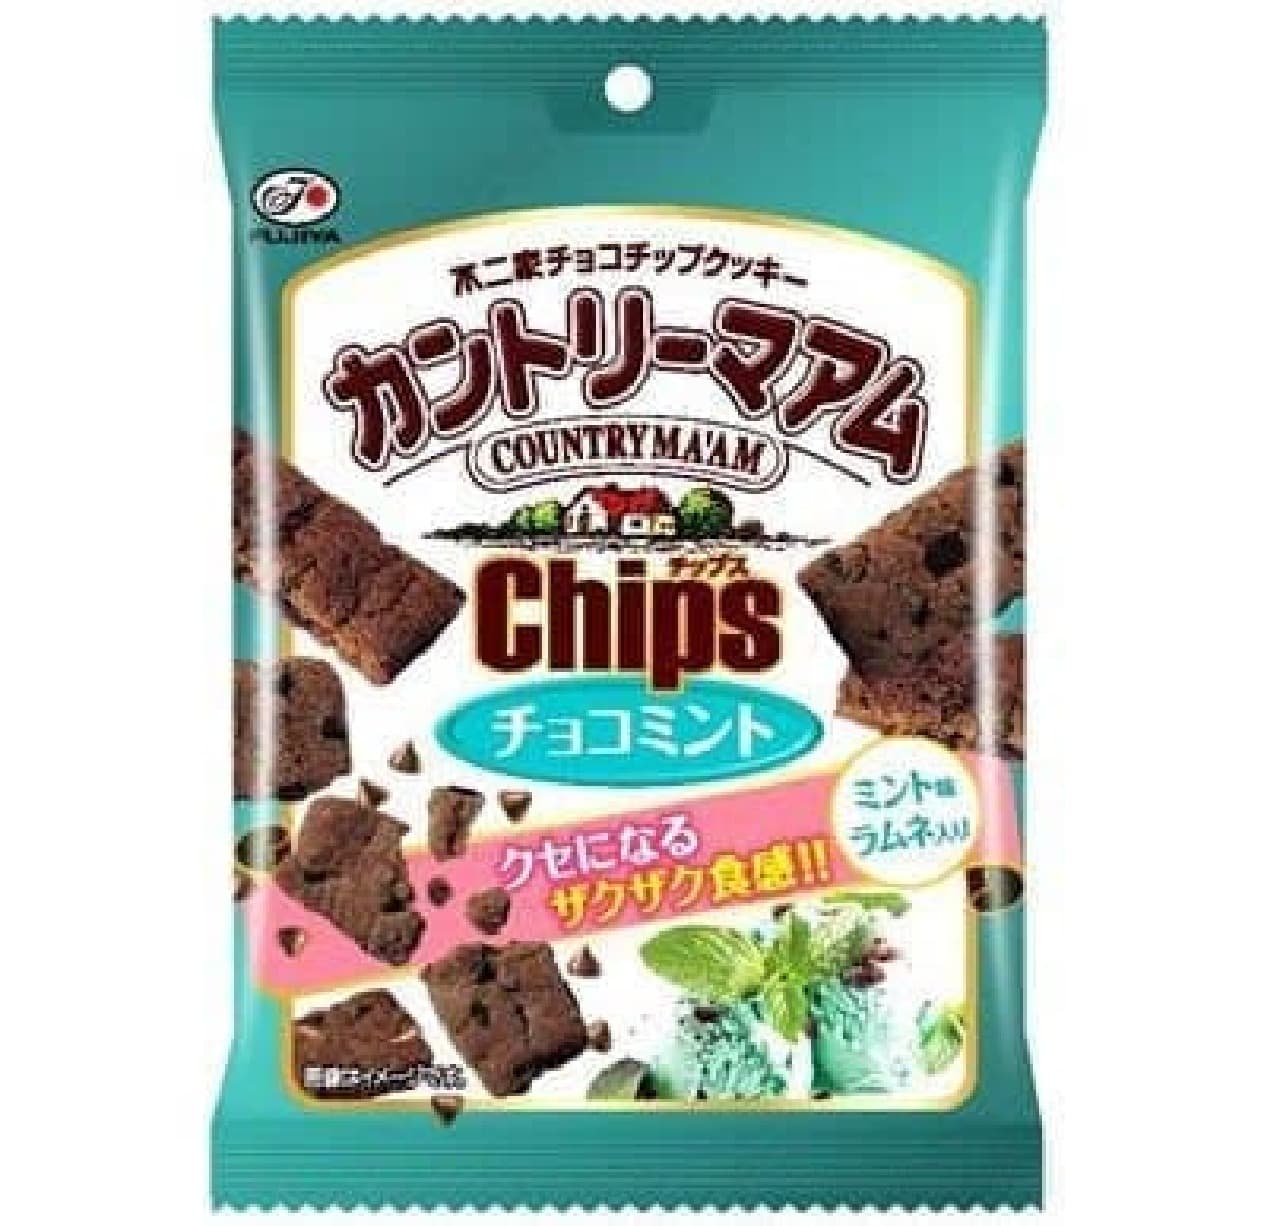 Fujiya's "Country Ma'am Chips (Chocolate Mint)"